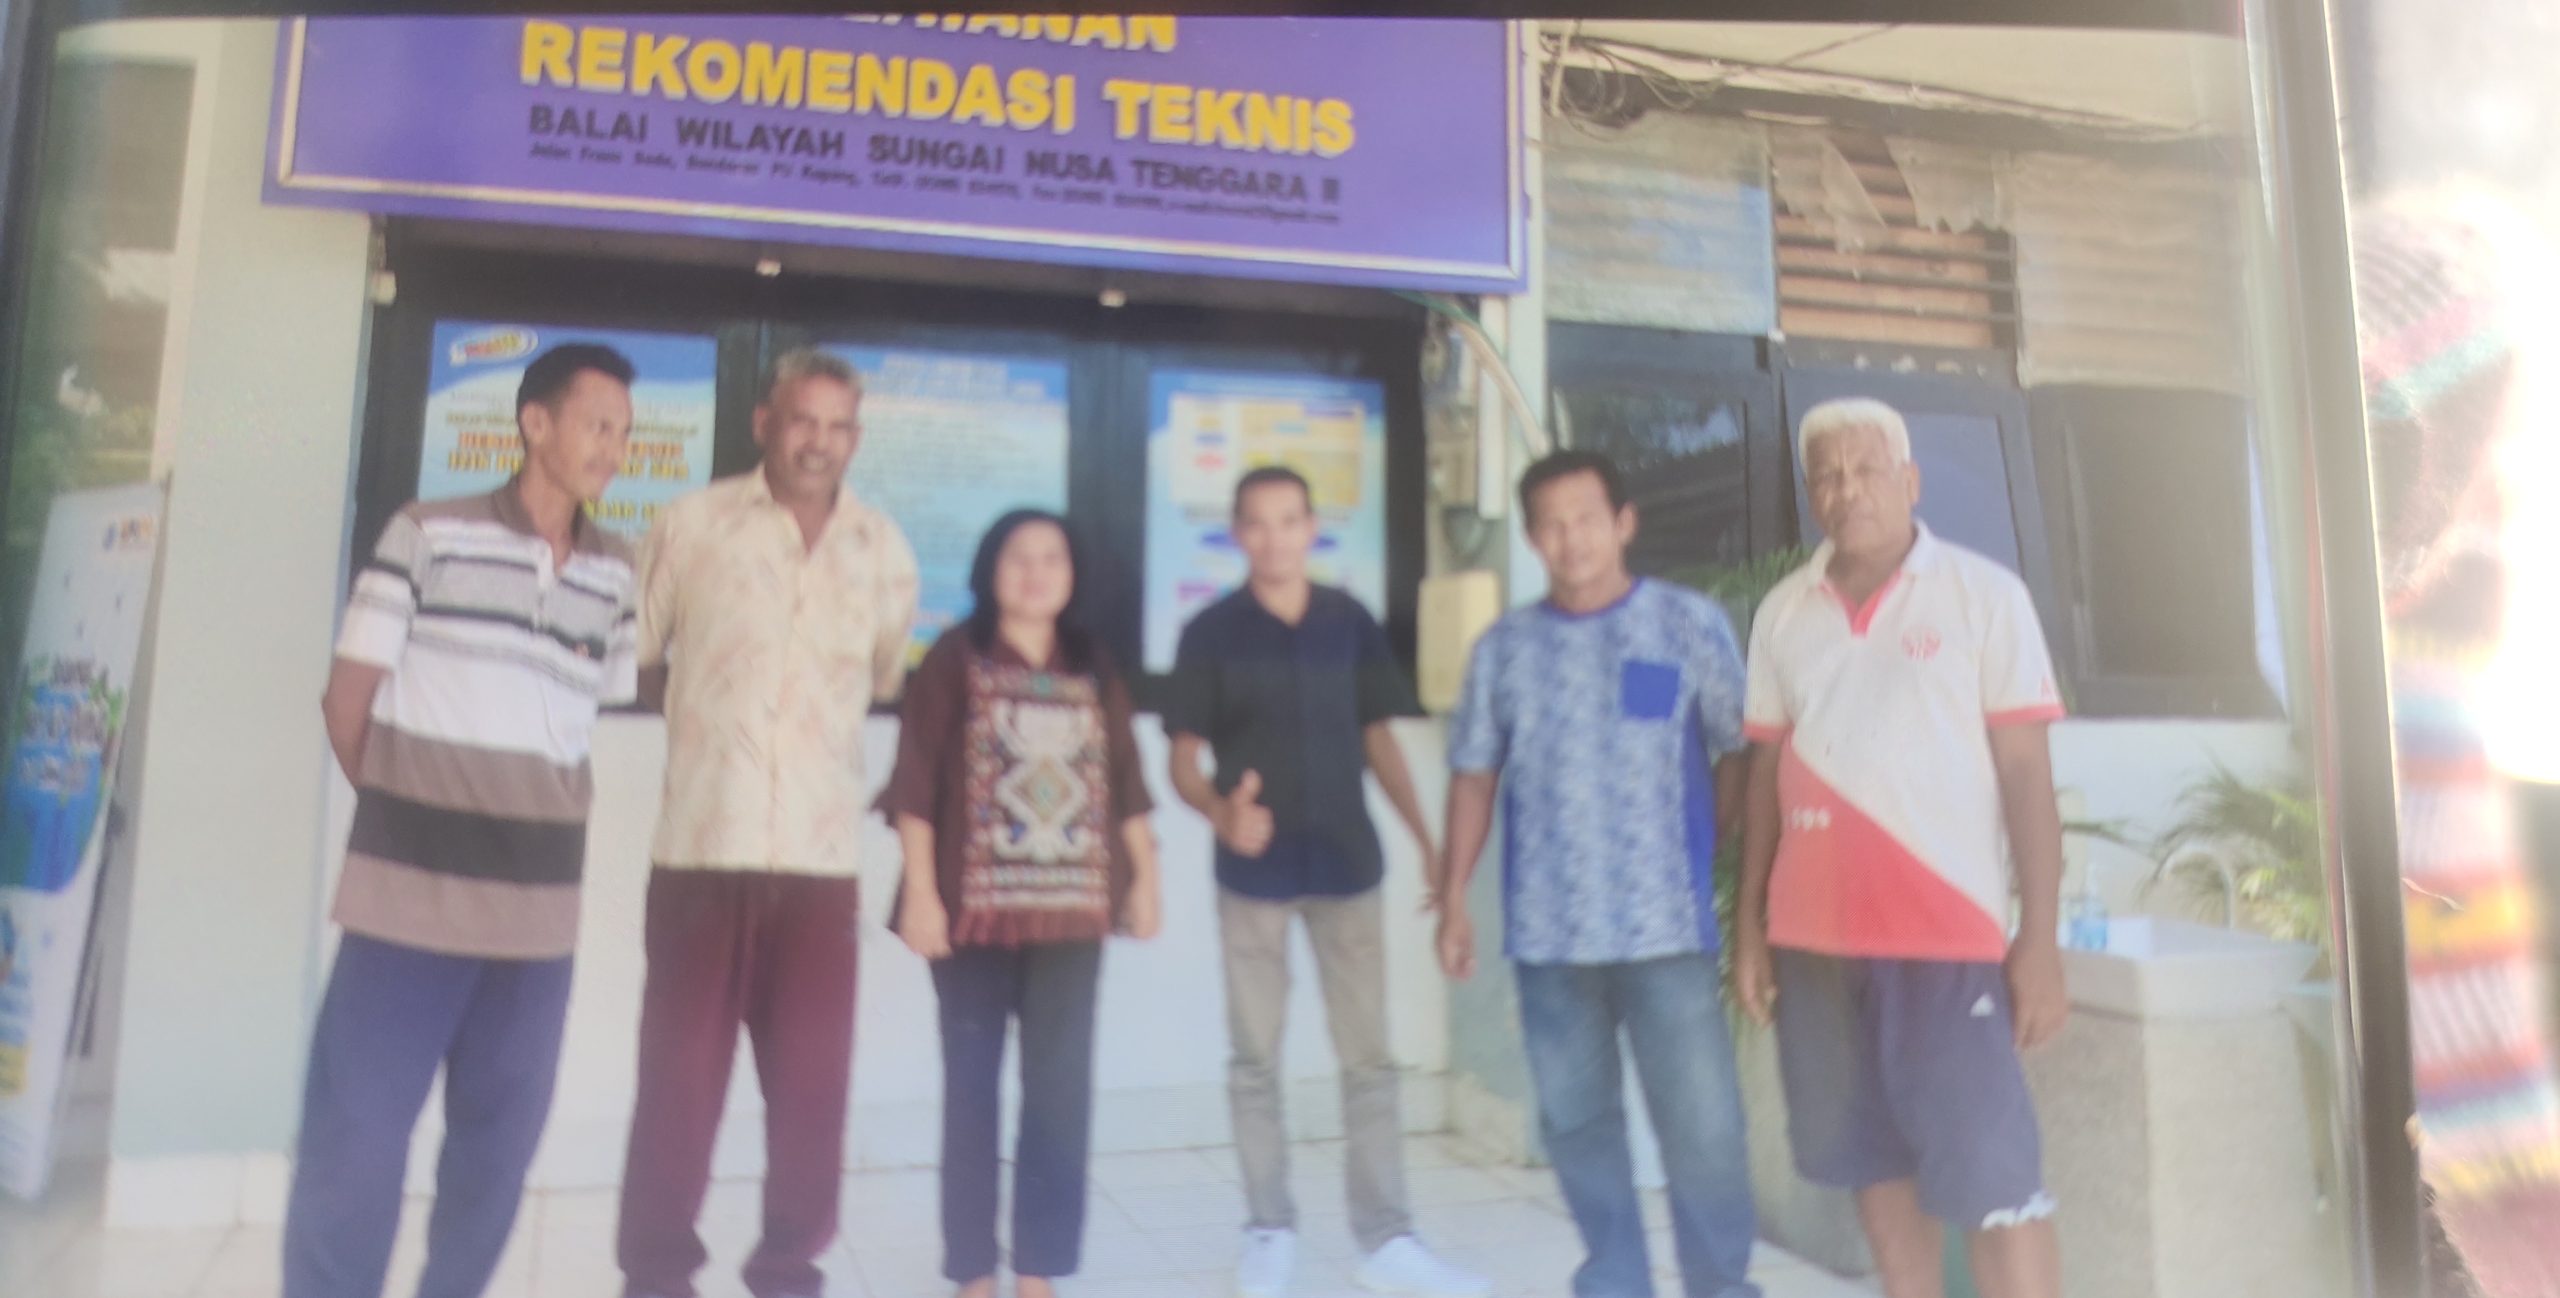 Foto. Ketua Komisi III DPRD Kabupaten Kupang Deasy Ballo - Foeh bersama tokoh tani Kecamatan Kupang Timur, Sambangi BWS NT II.